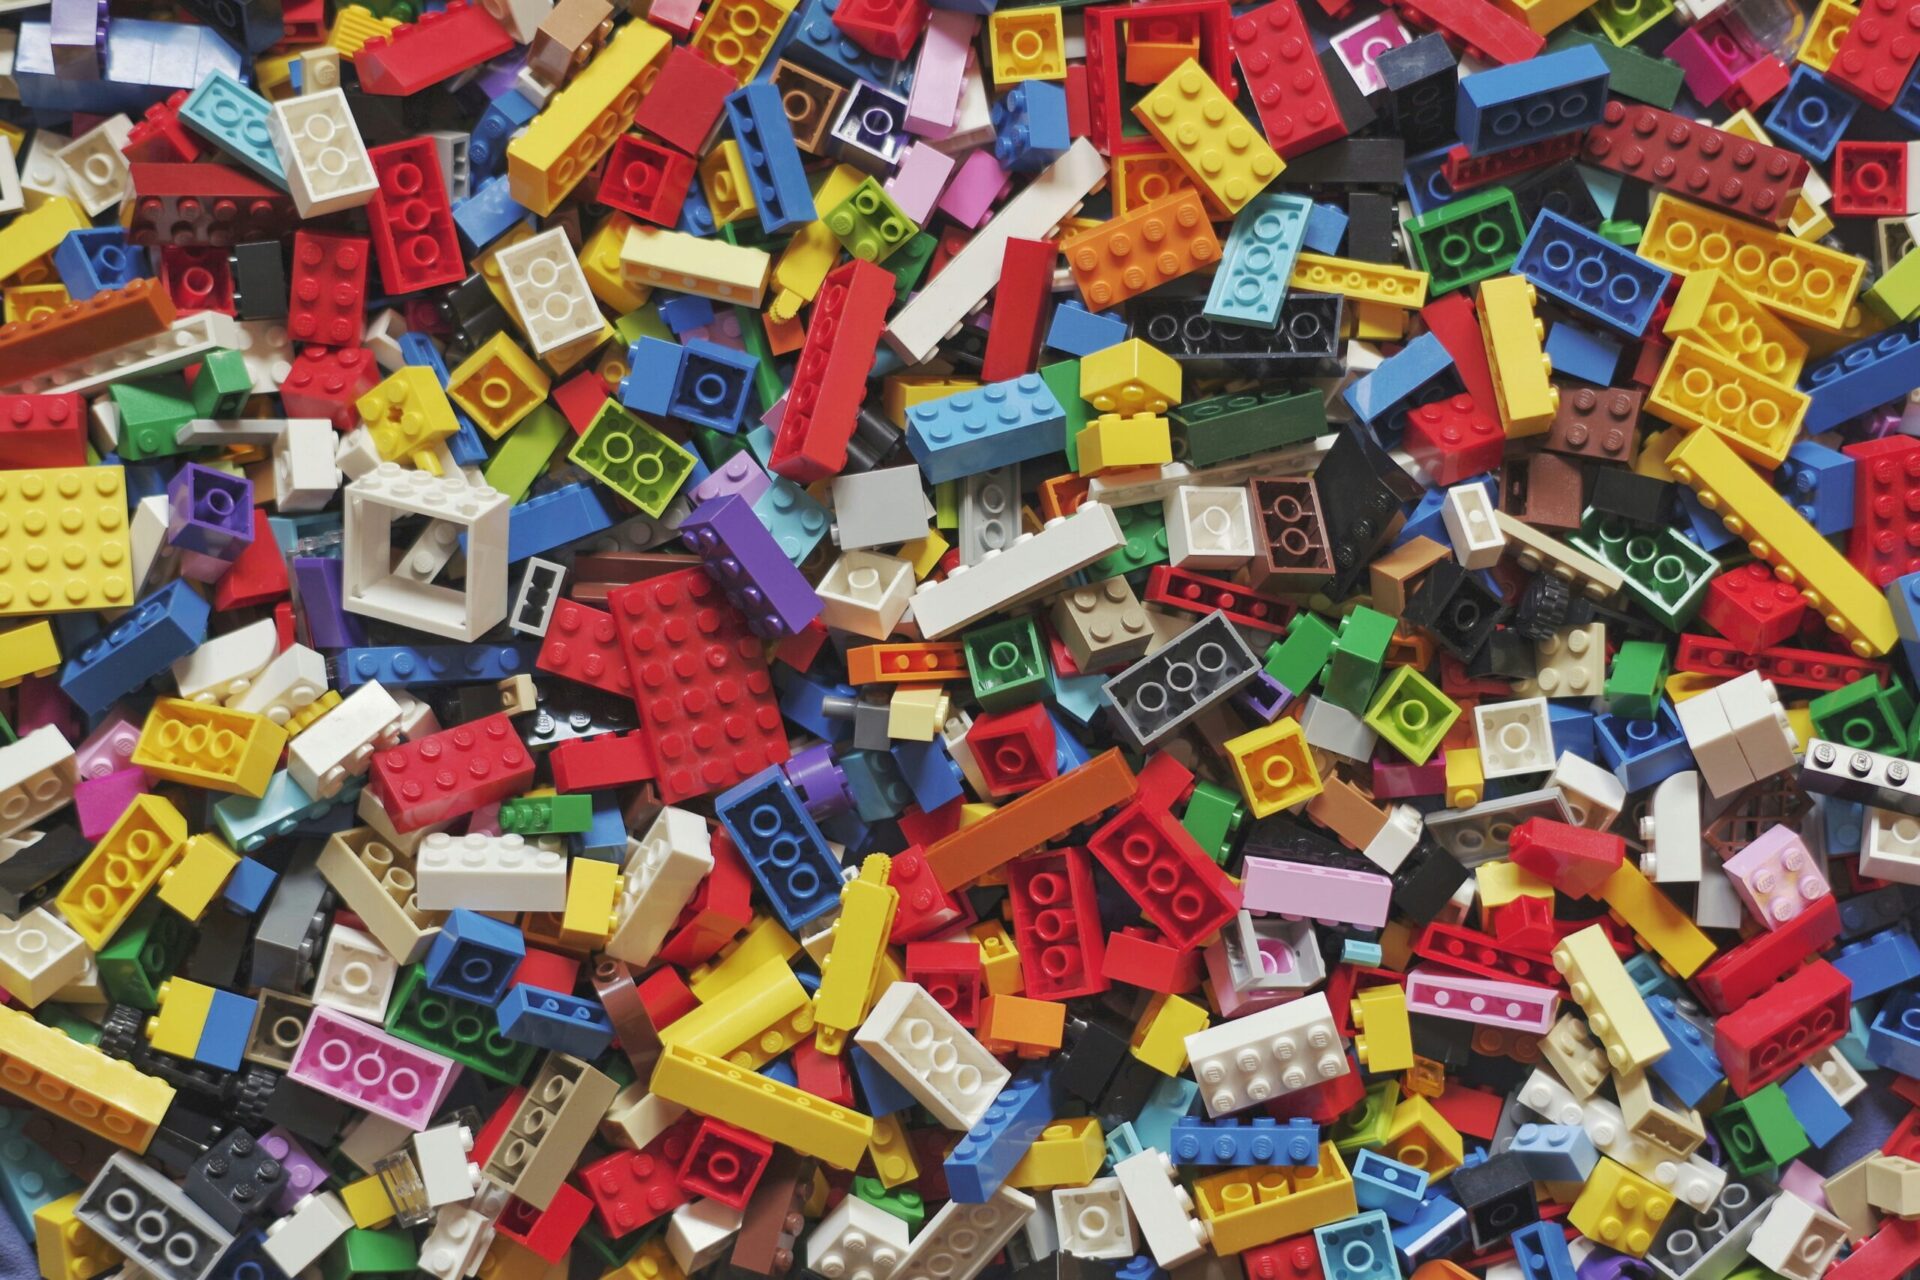 A pile of Lego blocks